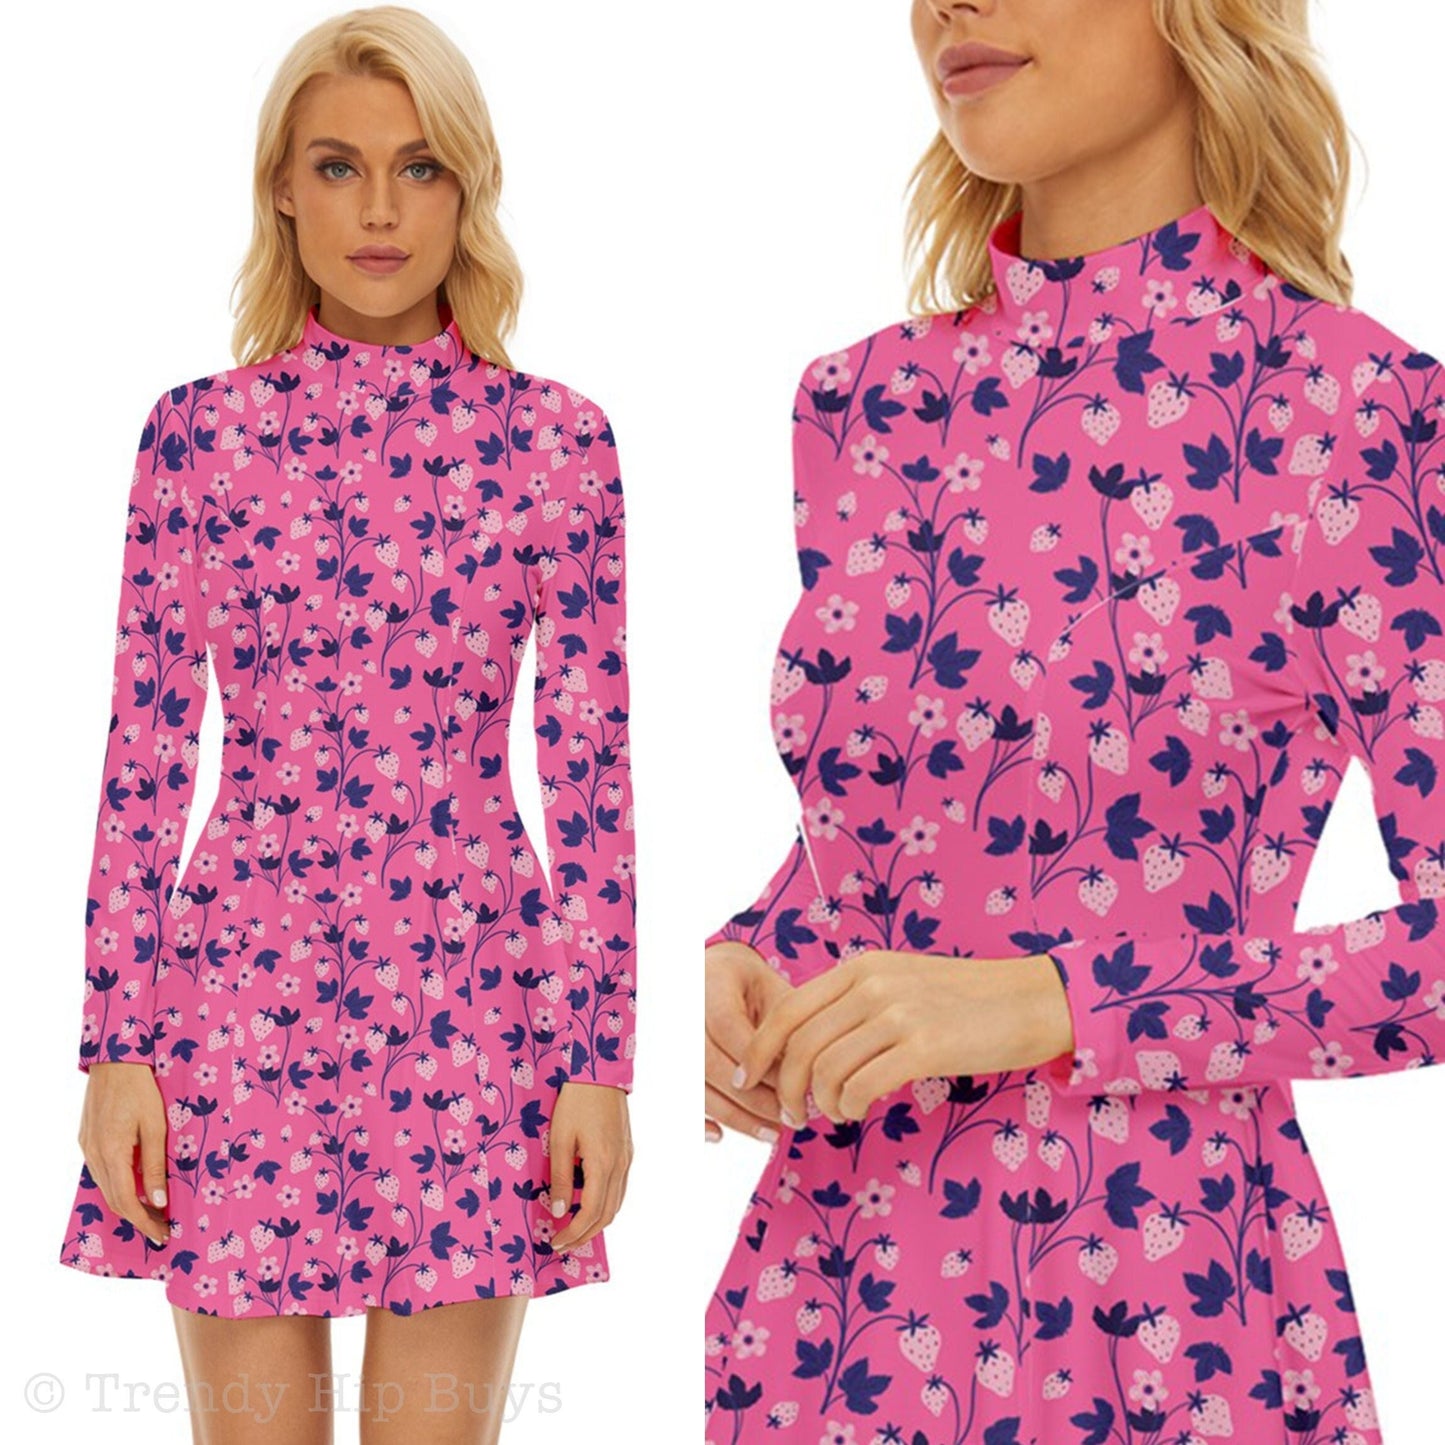 60er-Kleiderstil, Mod-Kleid, rosa Mod-Kleid, Erdbeerkleid, Rollkragenkleid, GOGO-Kleid, Kleid im 60er-Jahre-Stil, 60er-Minikleid, Retro-Kleid